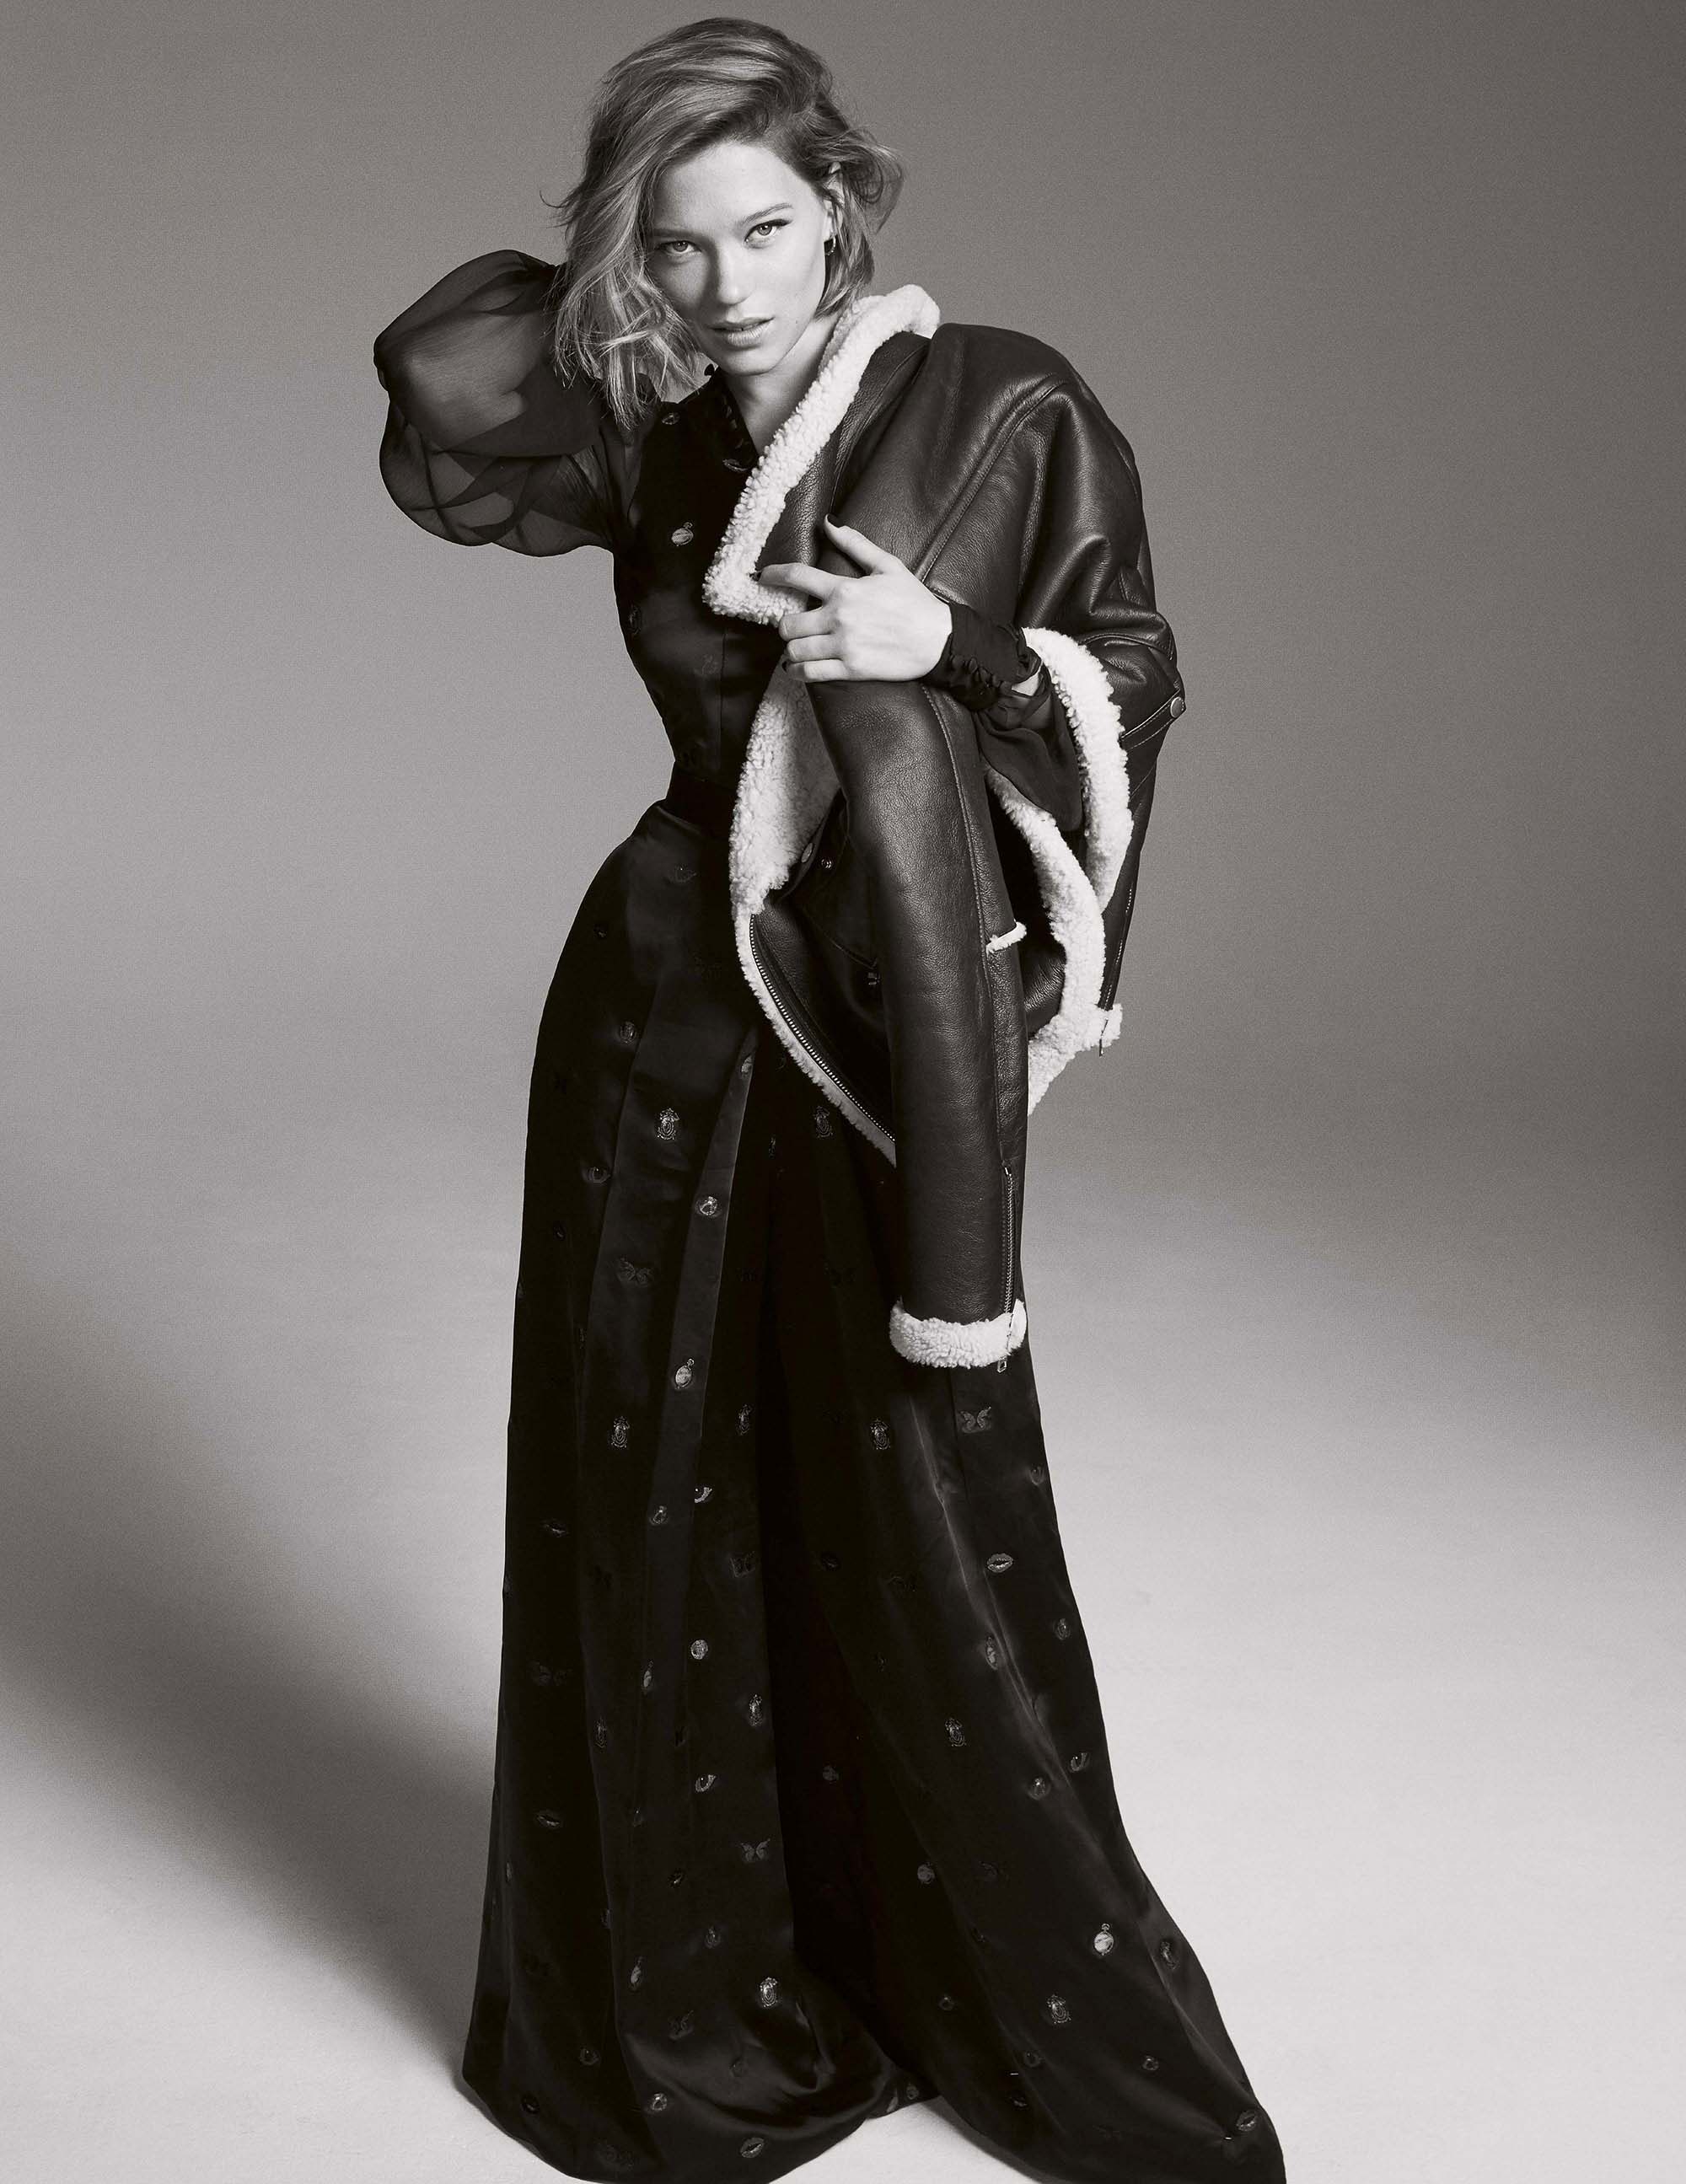 Lea Seydoux By Kai Z Feng For British Elle June 2016